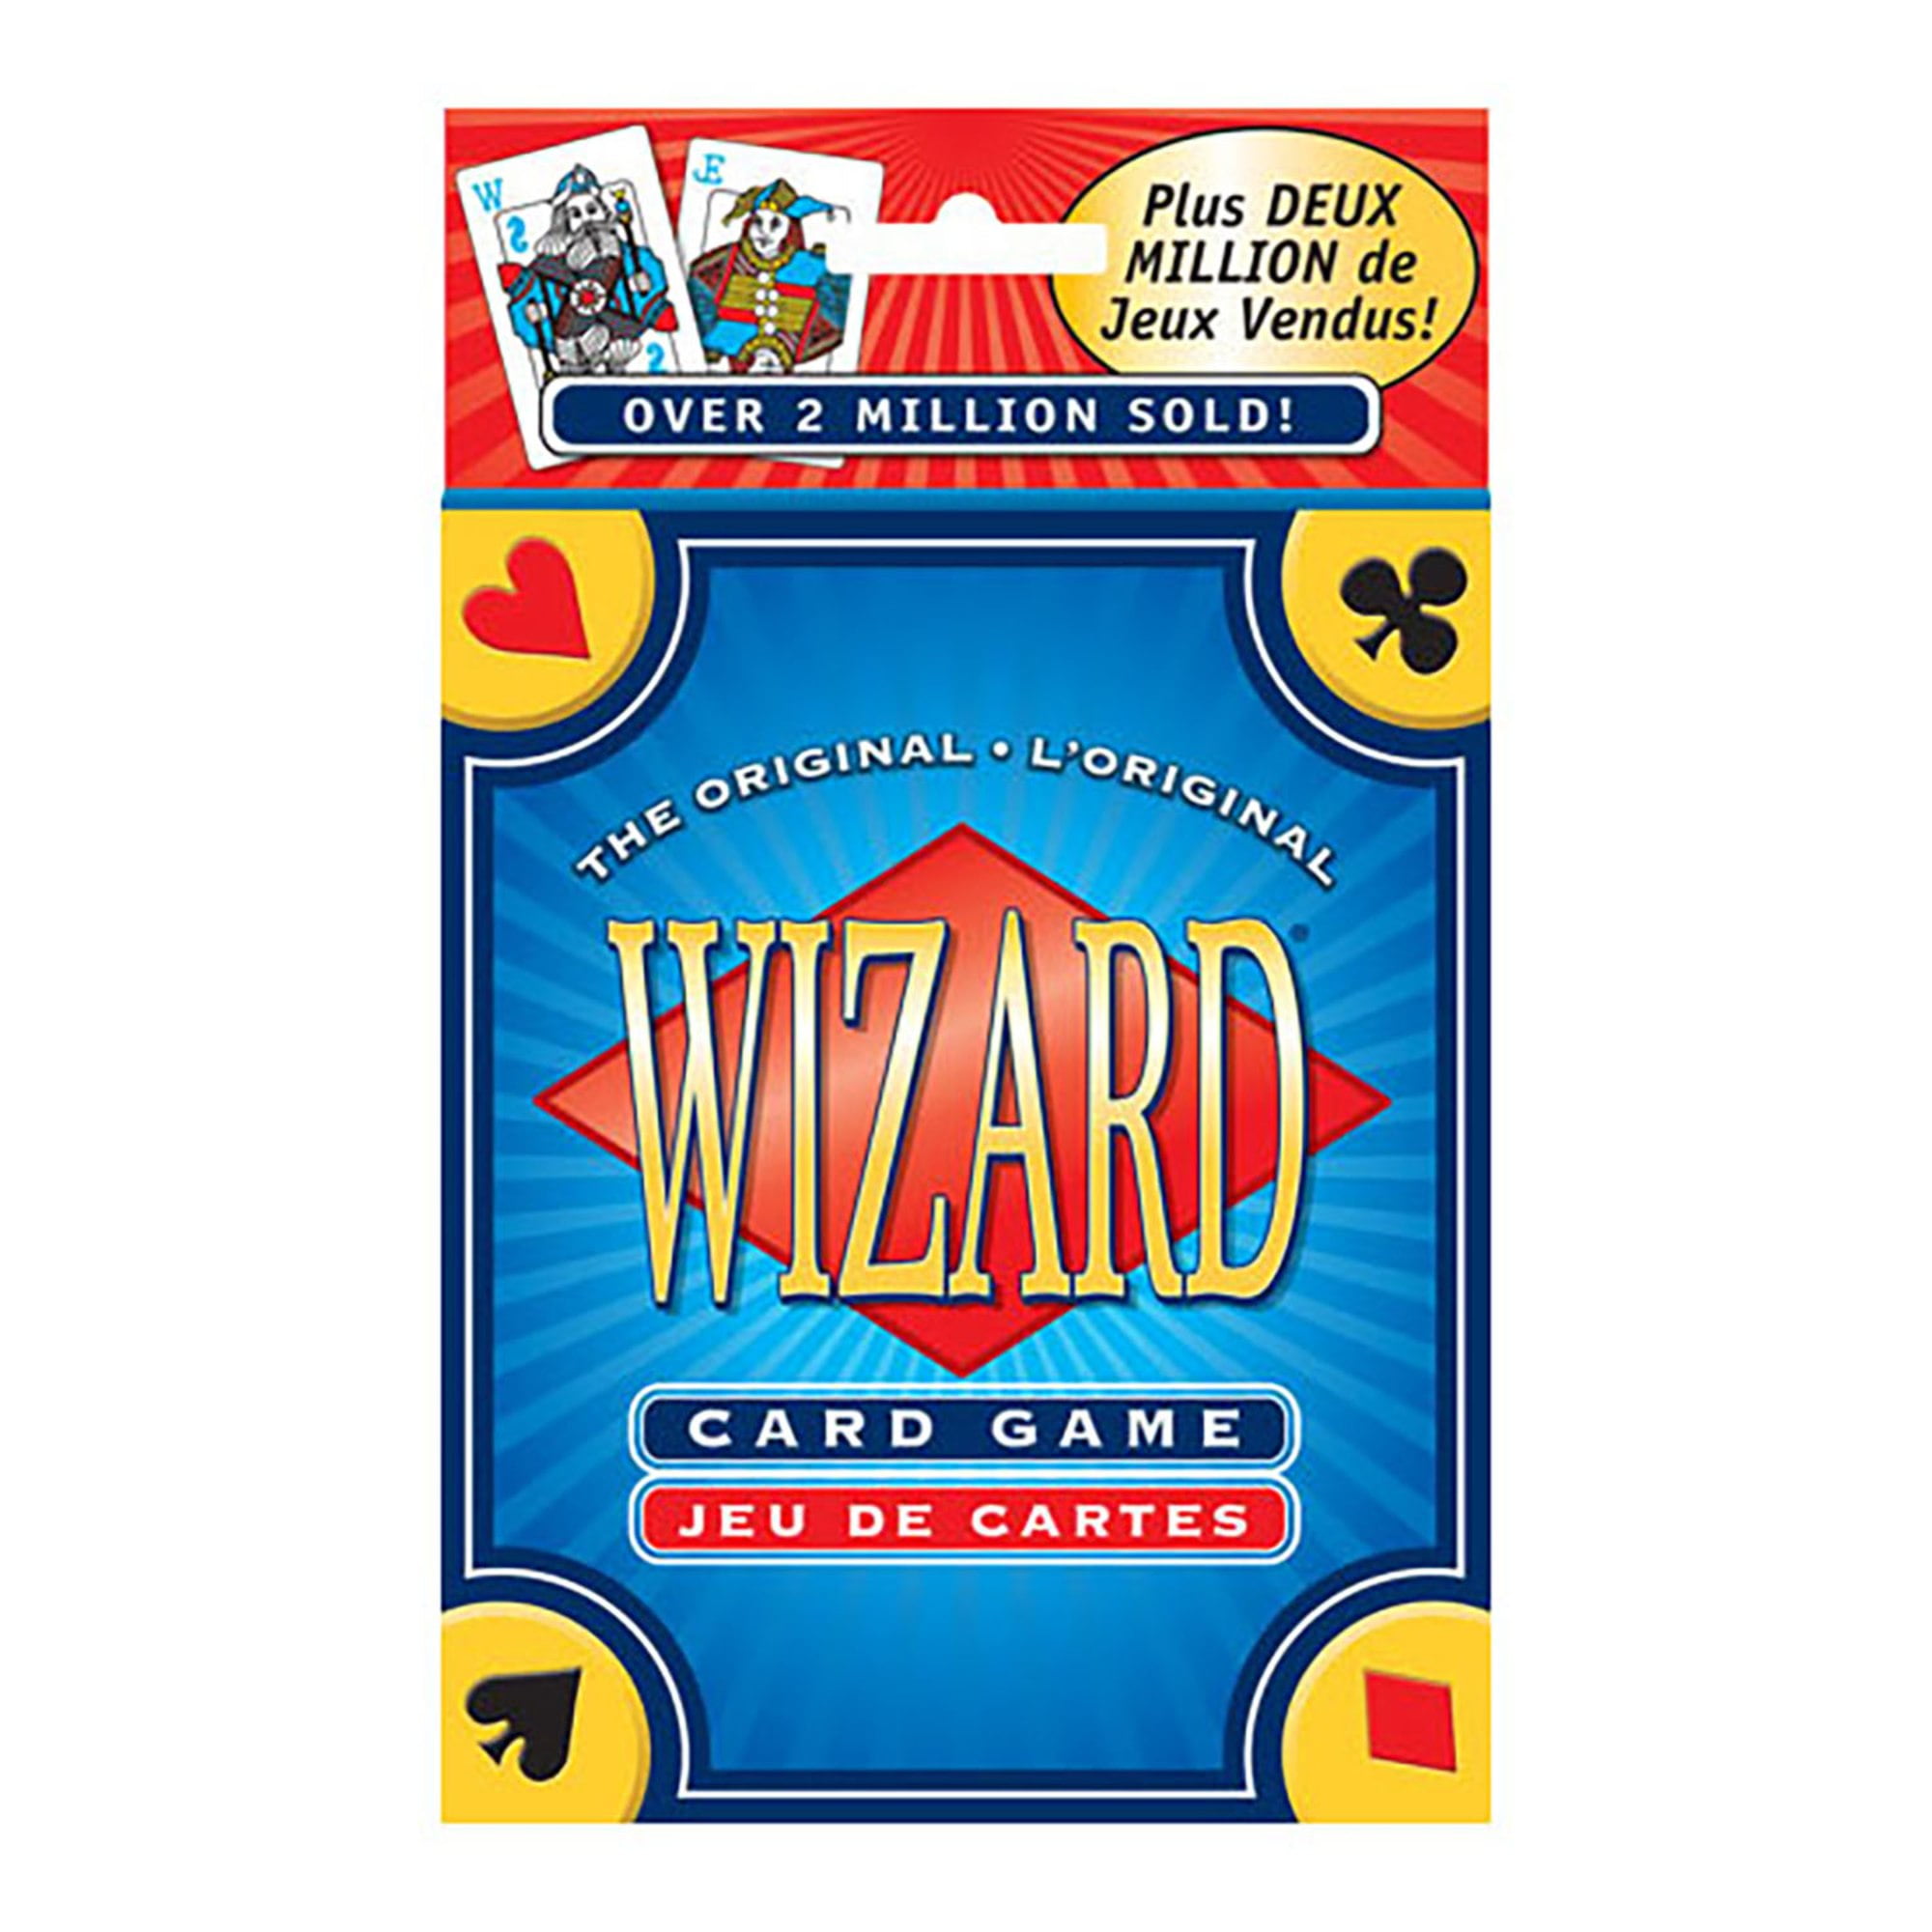 Munchkin Collectible Wizard et Bard Starter Set Jeu de cartes